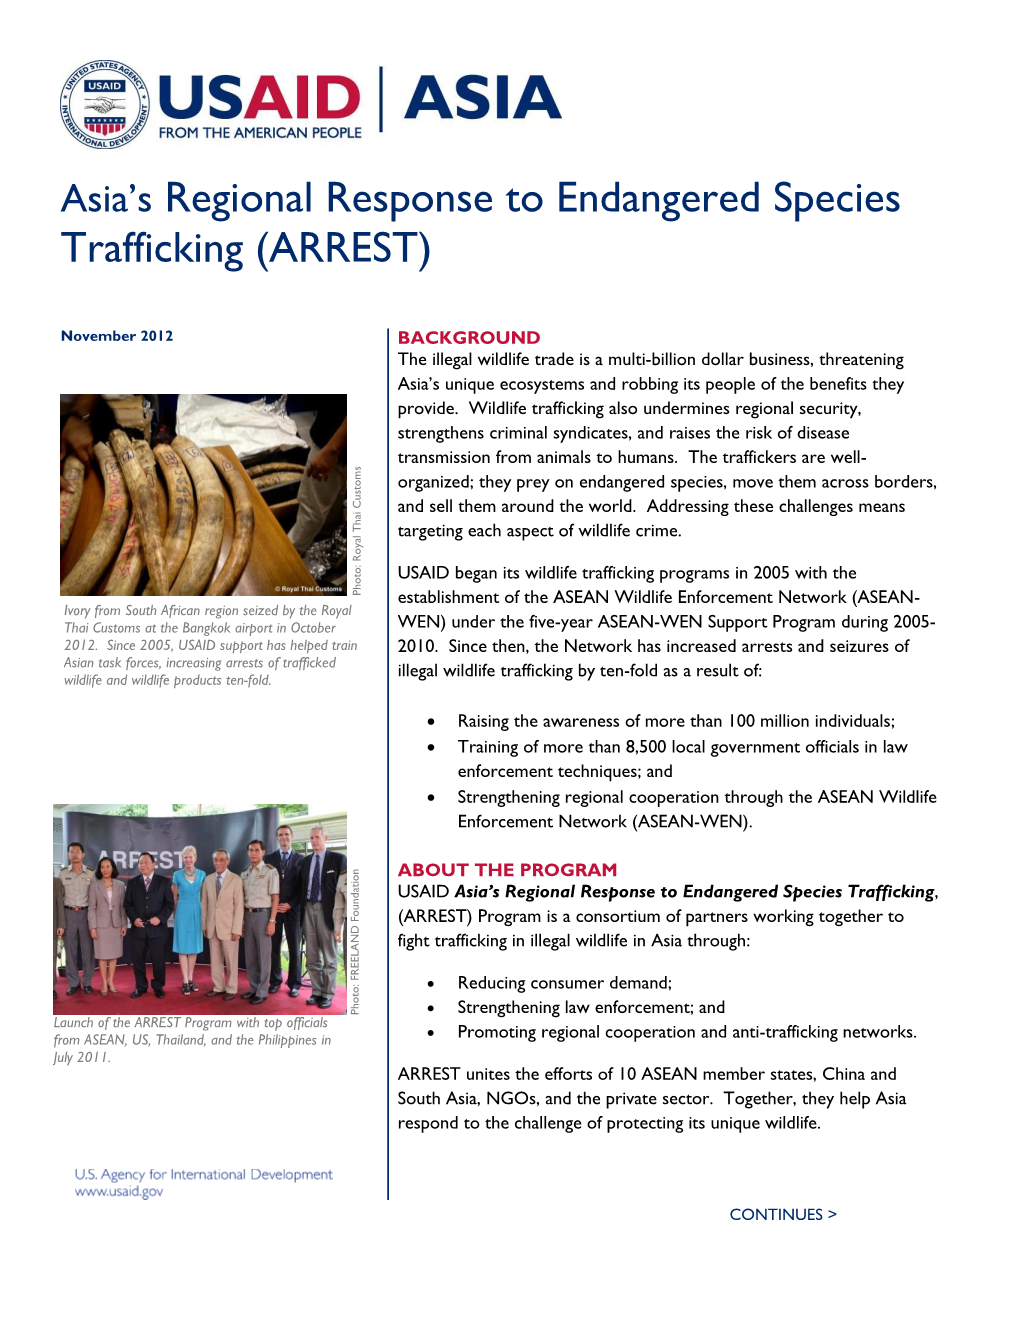 Asia's Regional Response to Endangered Species Trafficking (ARREST)